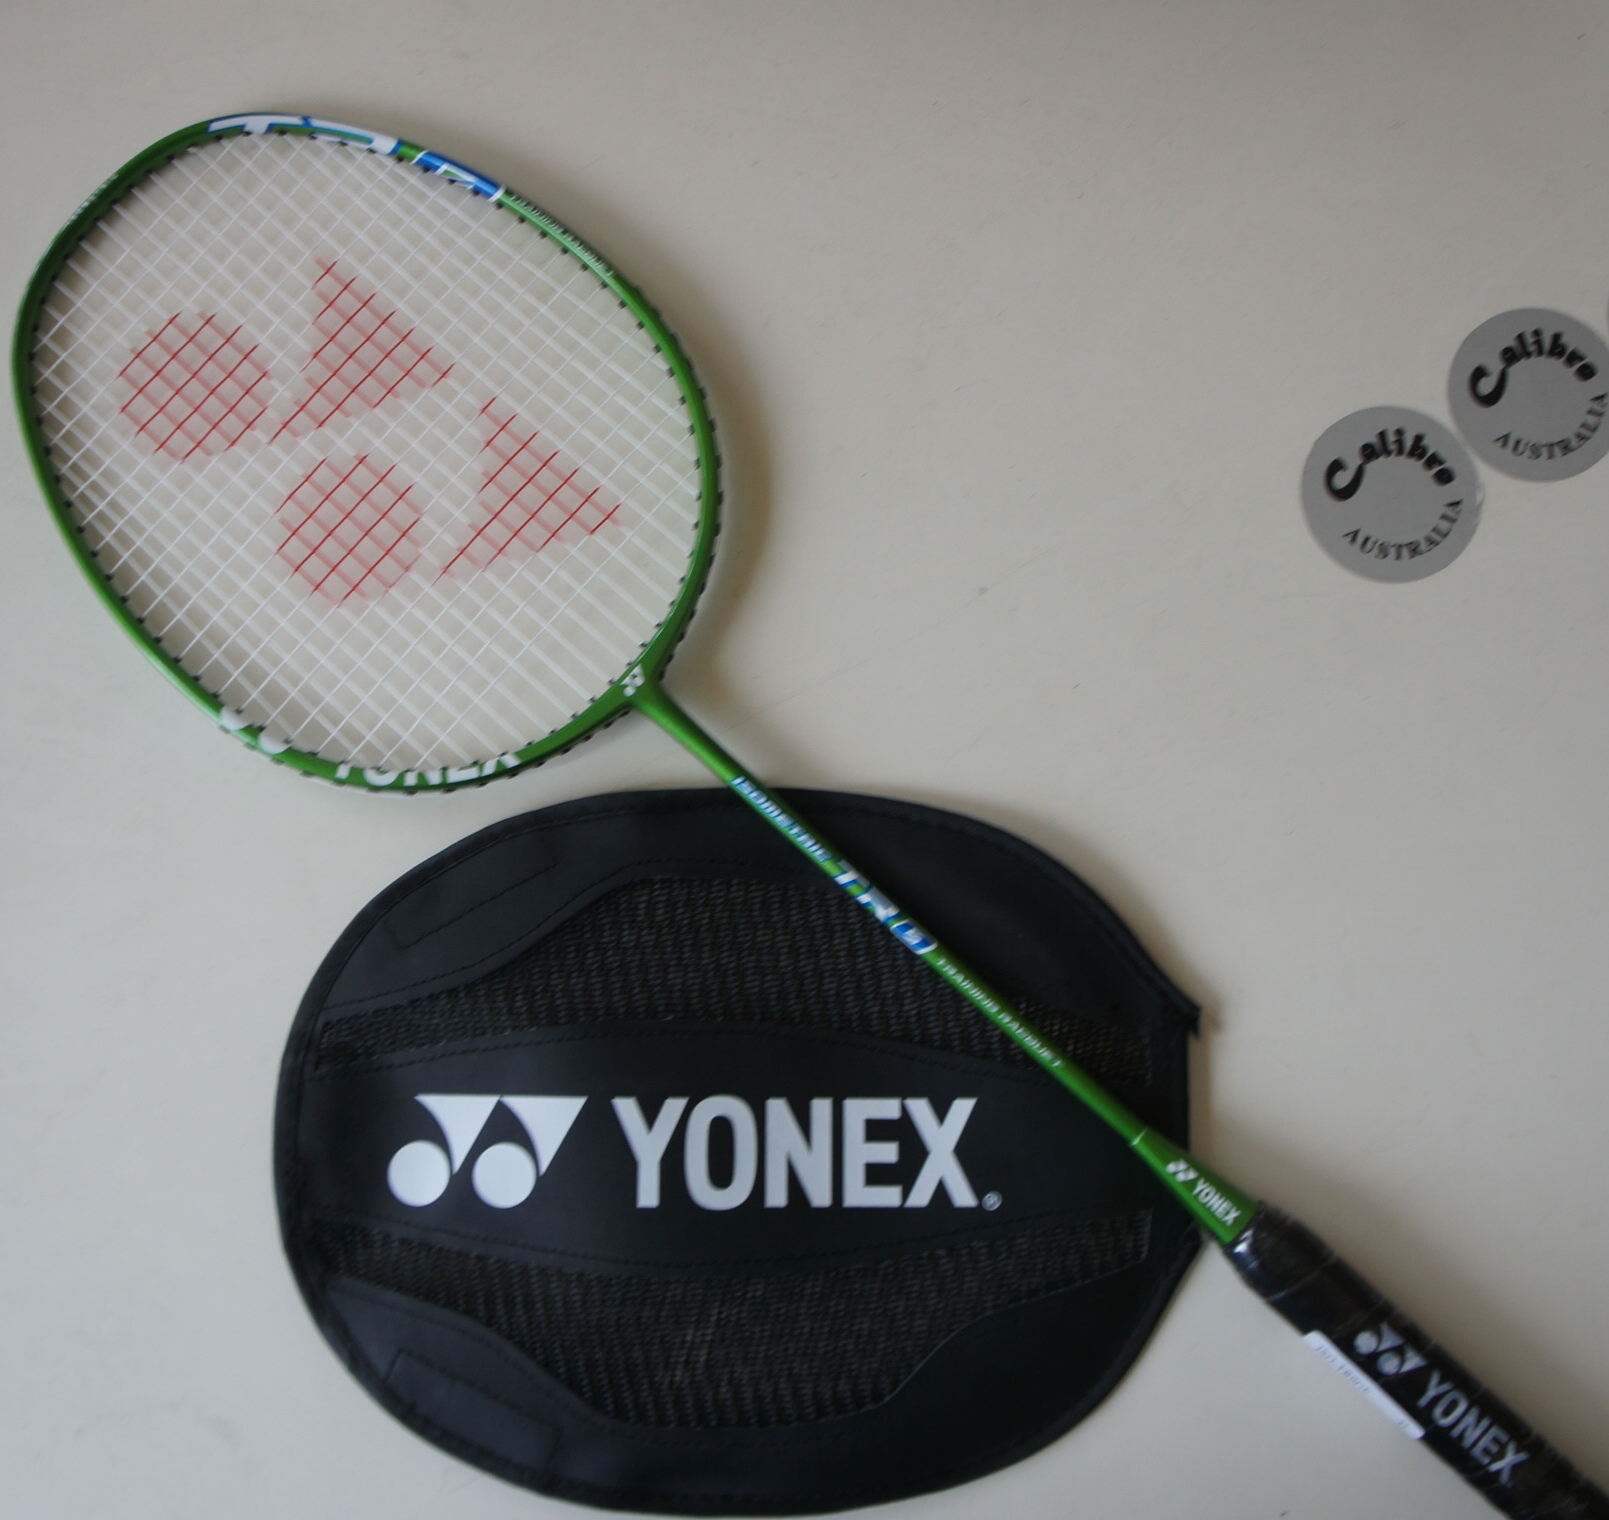 YONEX Isometric TR0 Badminton Racquet, 150g Training Racket w/Mesh Cover, Strung